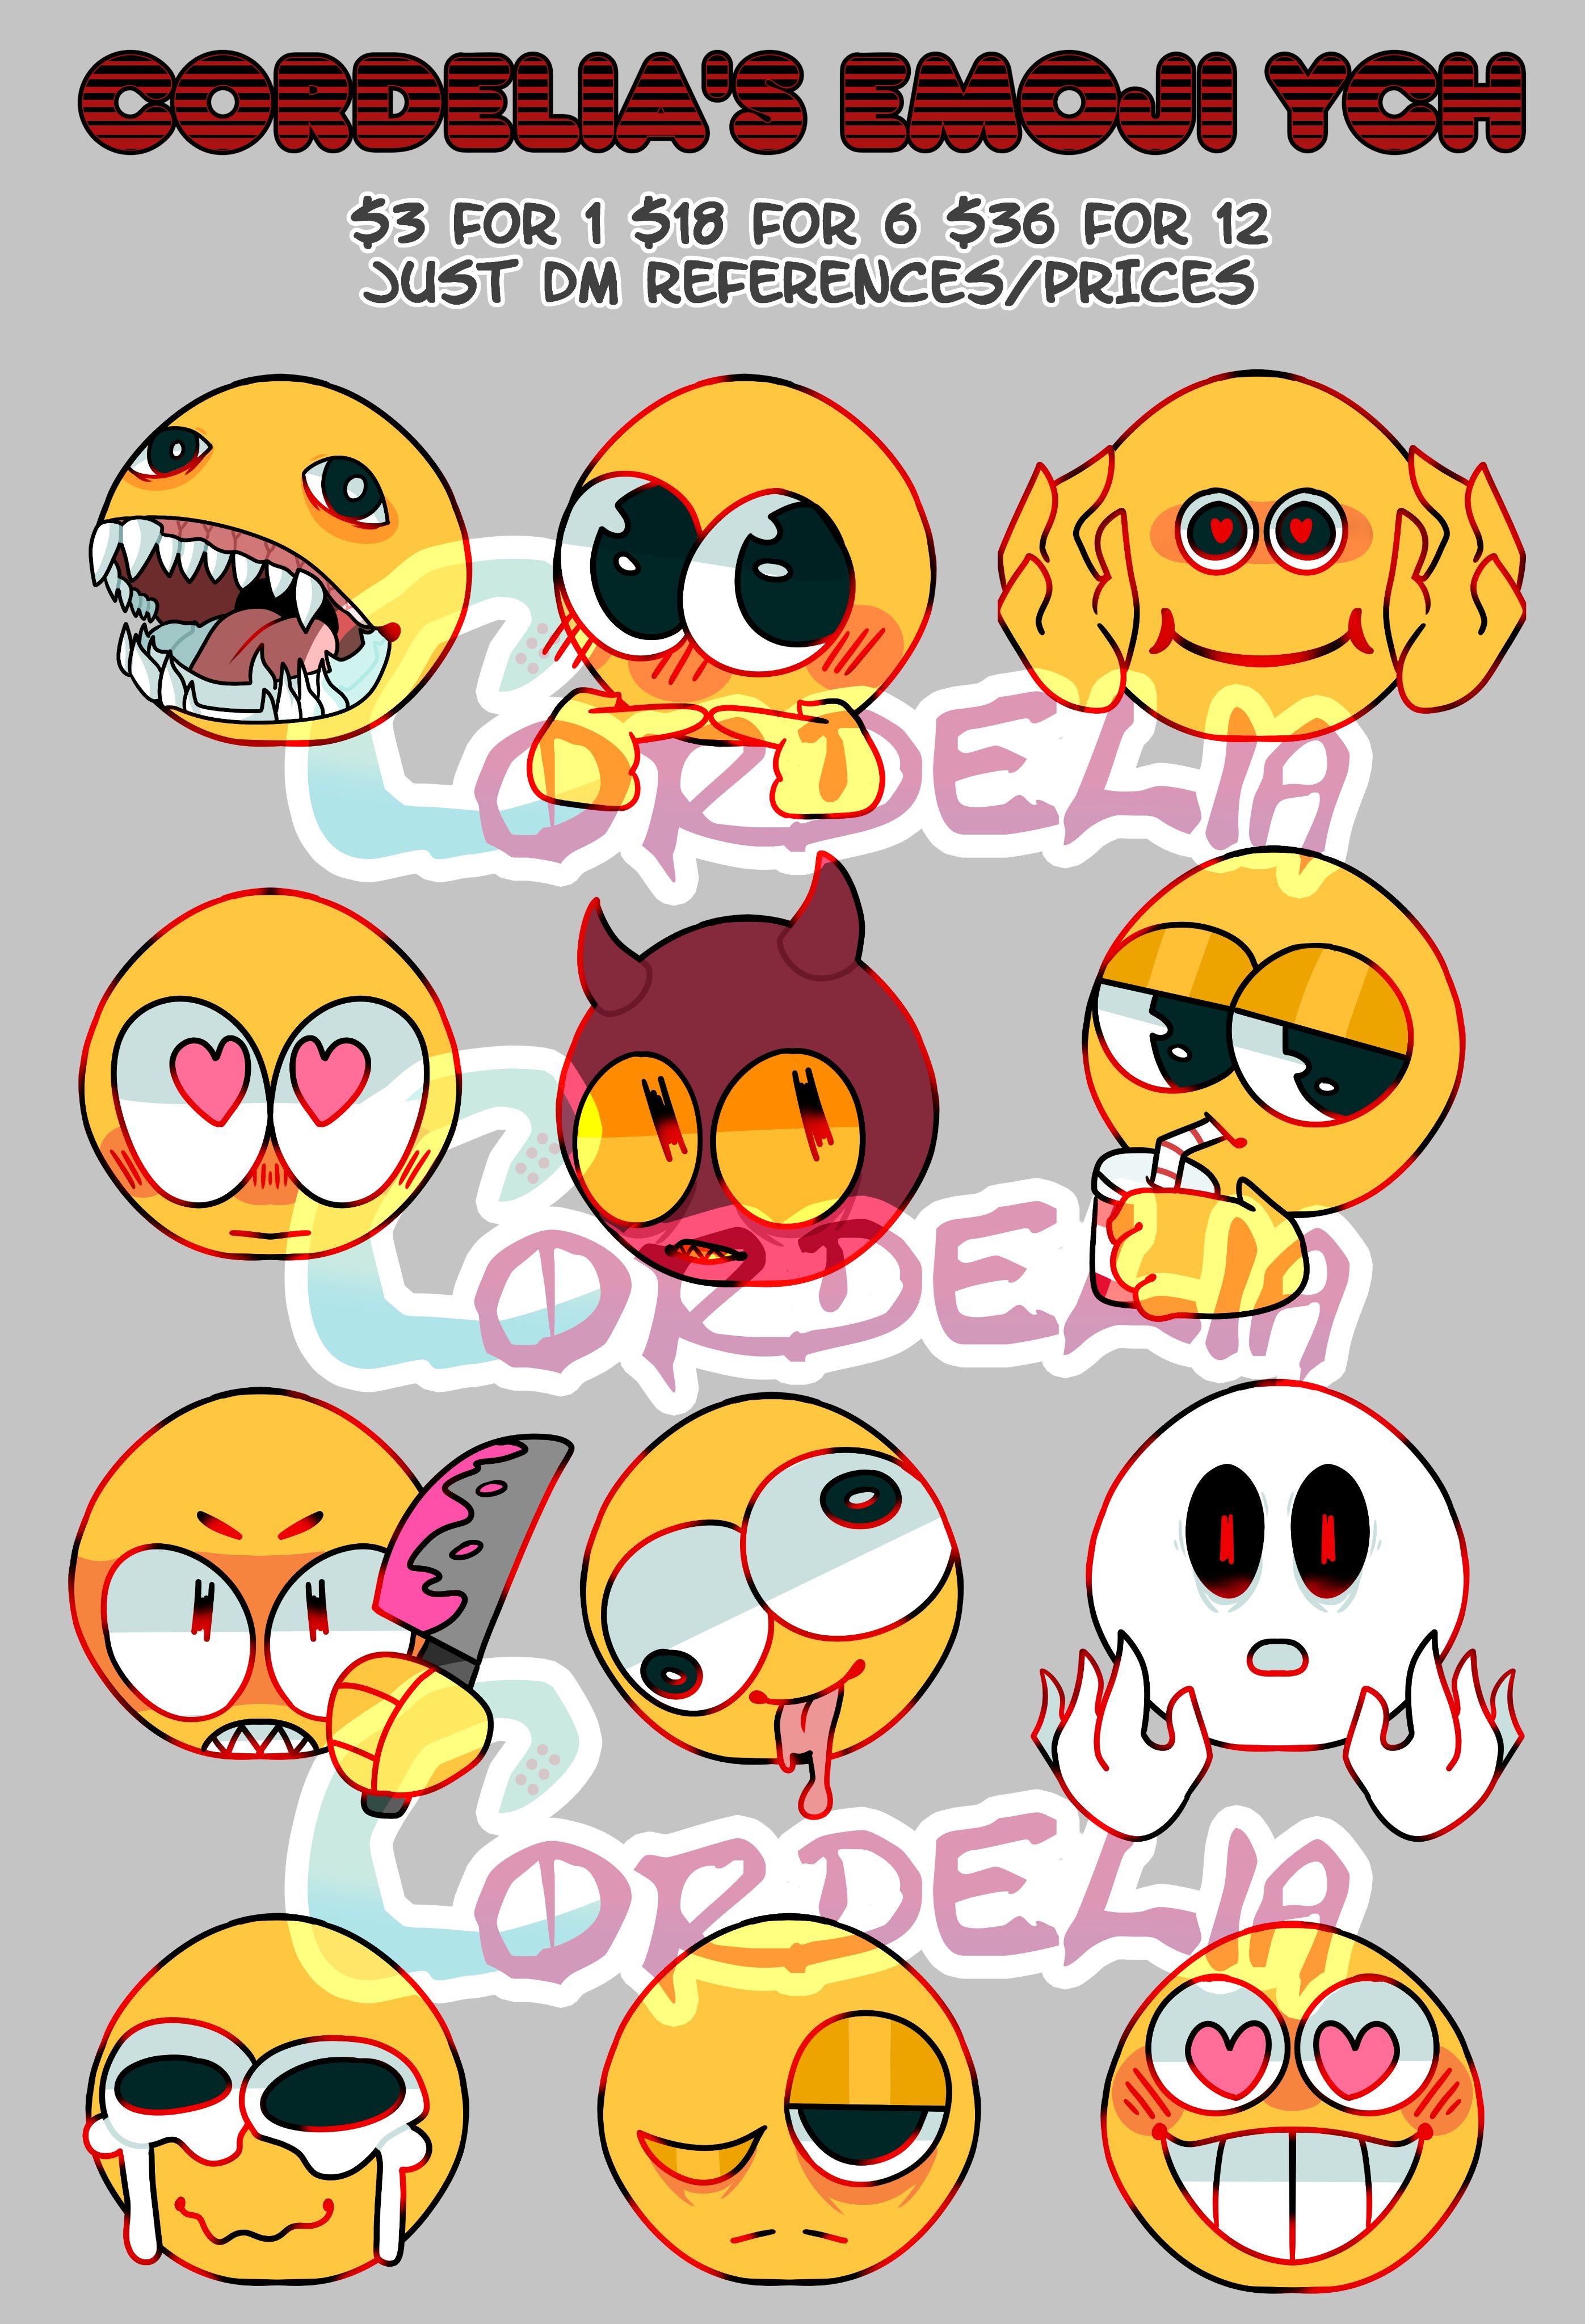 Cursed Emoji Commission by Risadinha -- Fur Affinity [dot] net